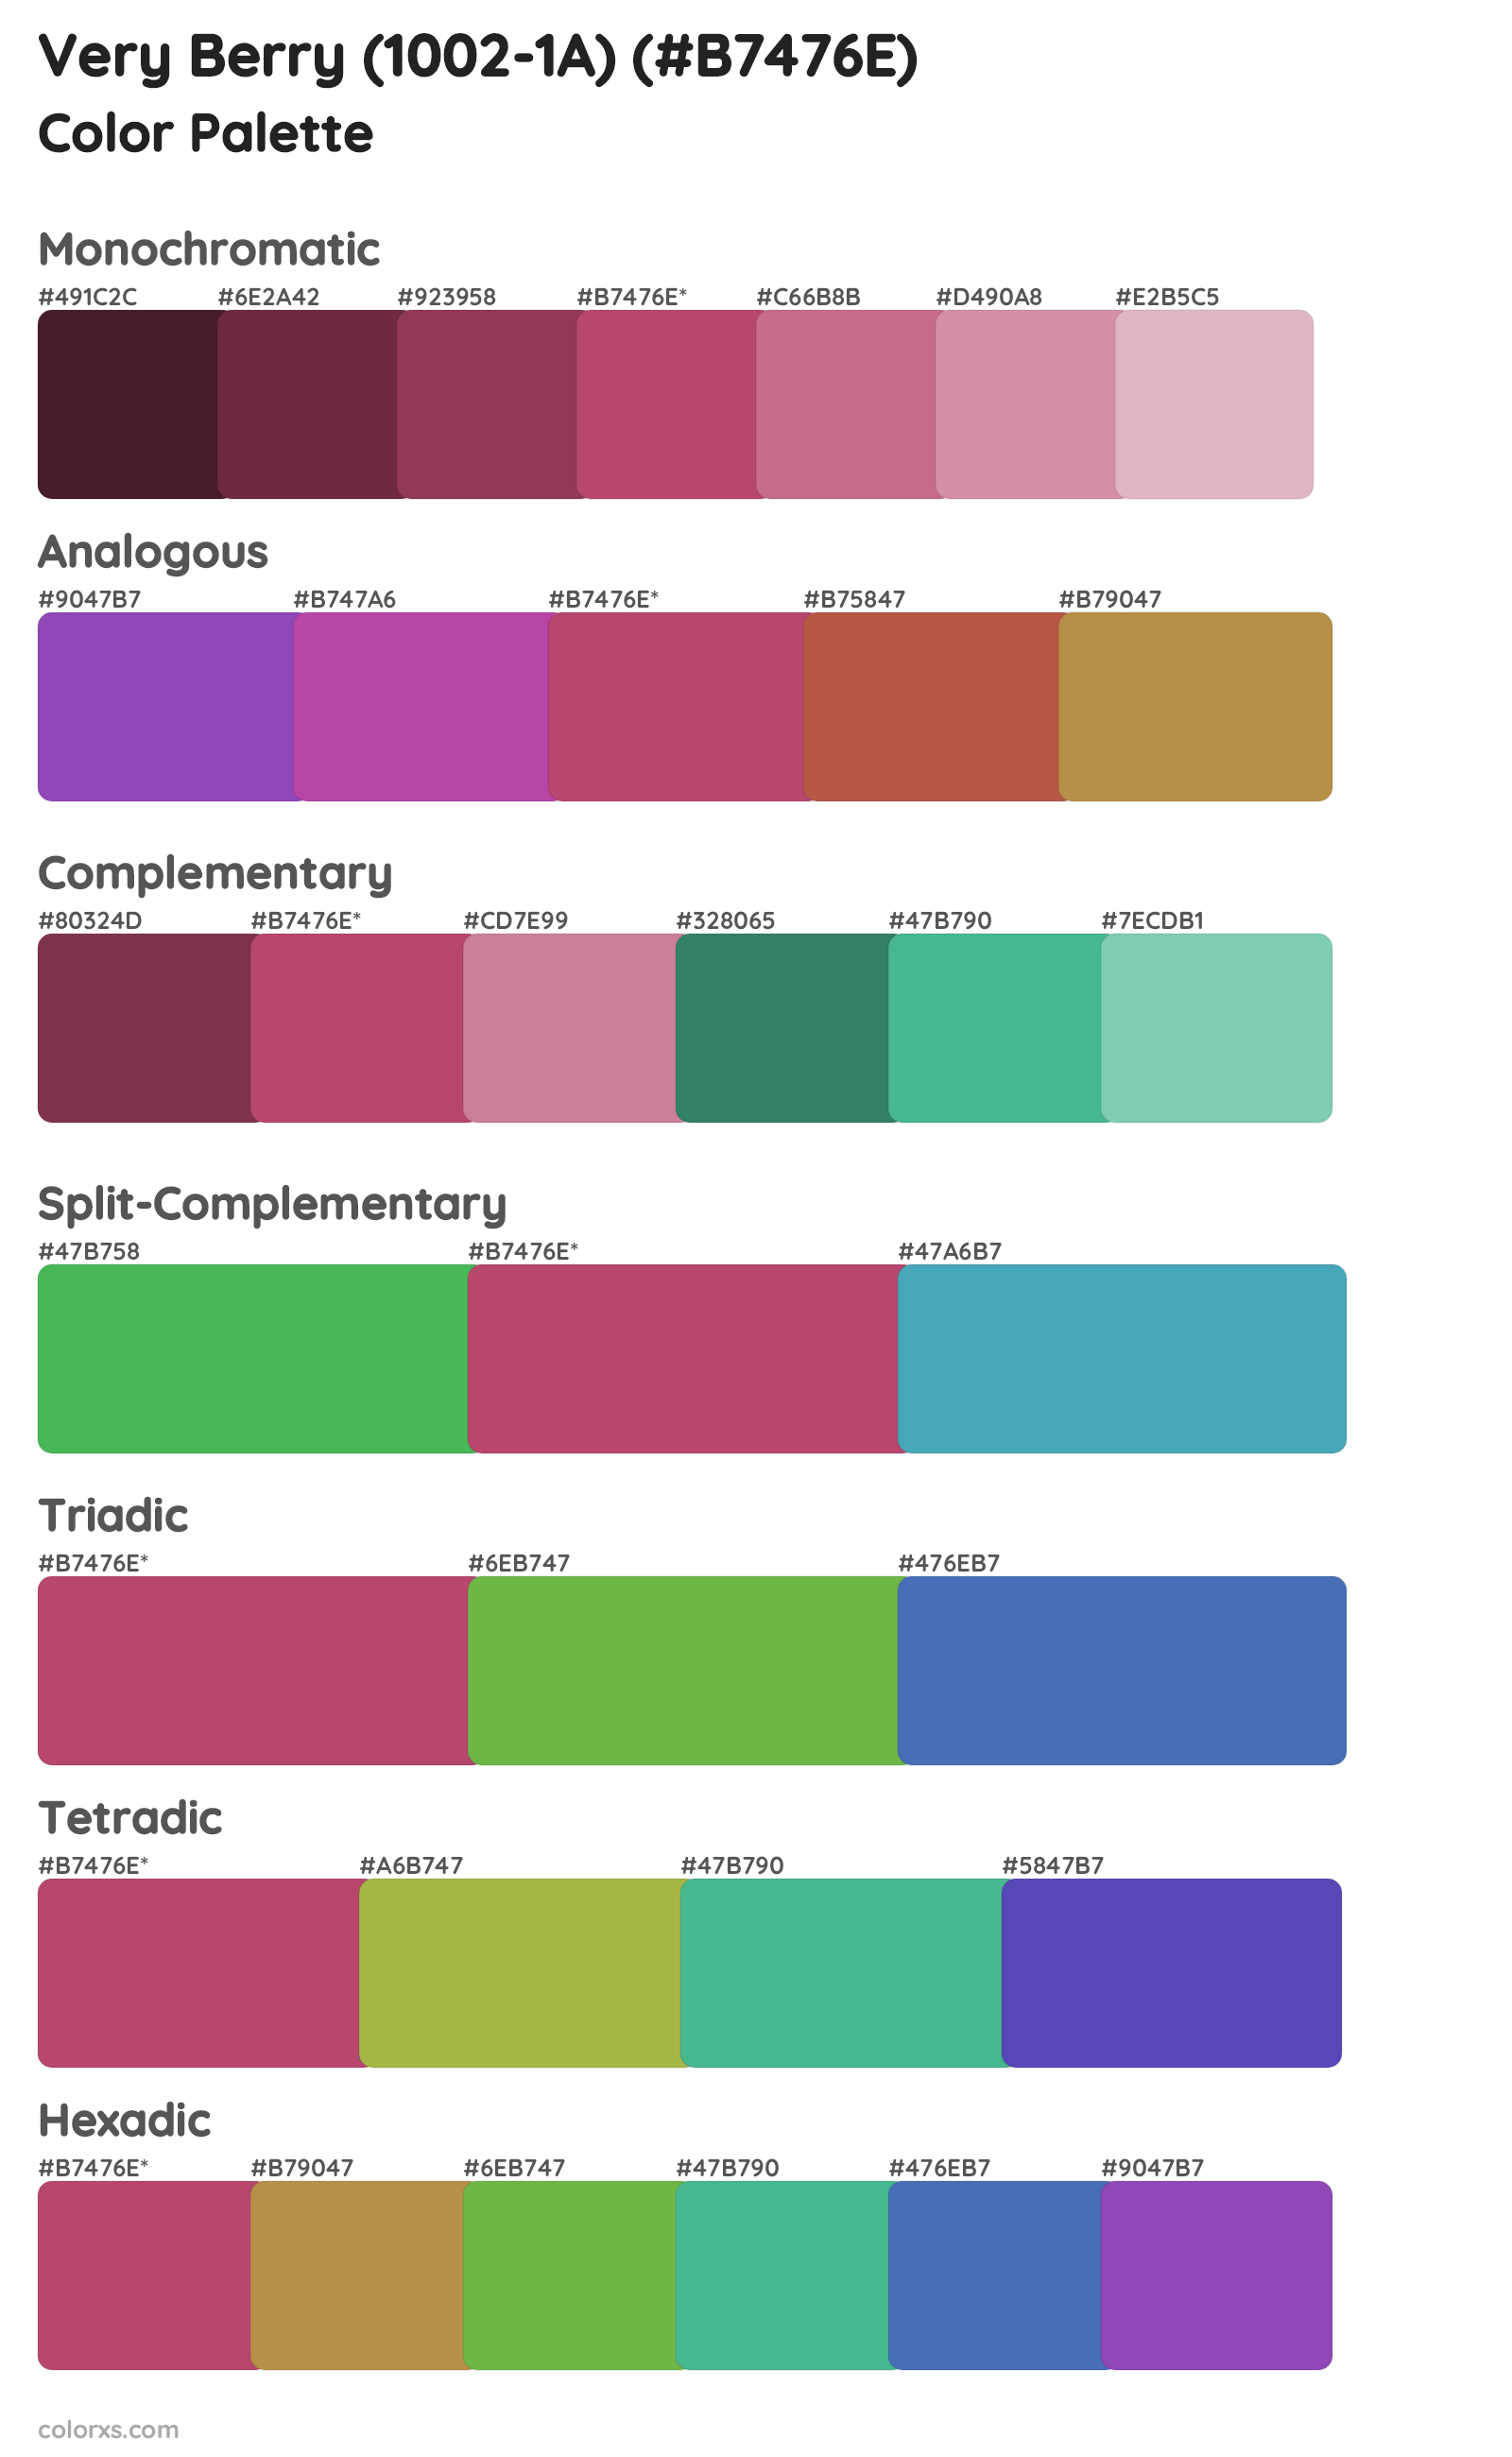 Very Berry (1002-1A) Color Scheme Palettes